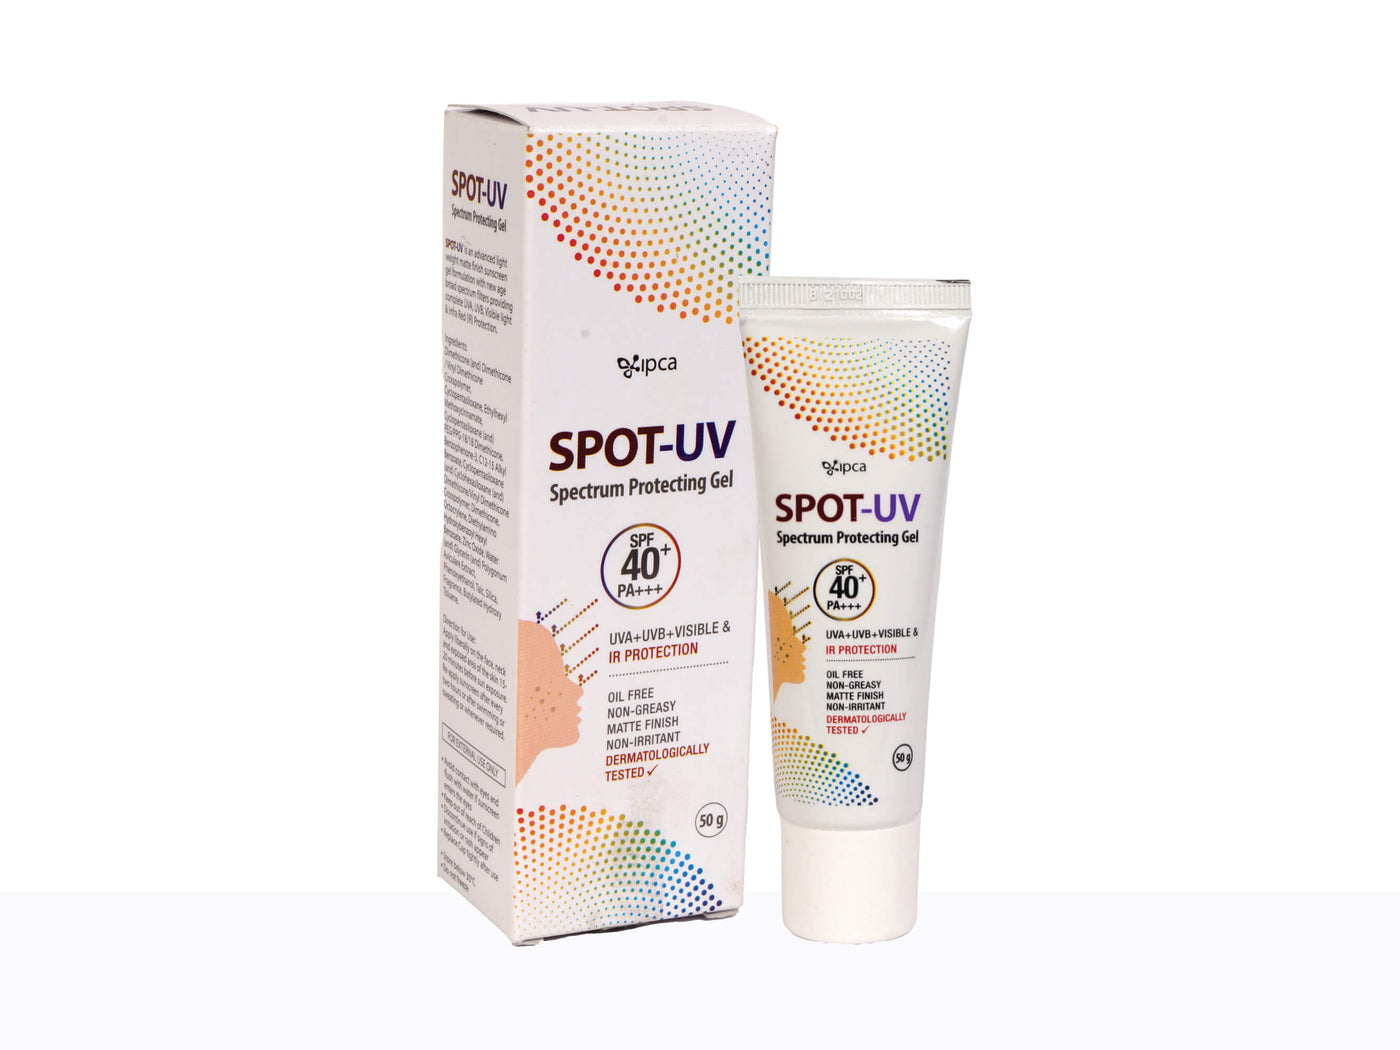 IPCA Spot-UV Spectrum Protecting Gel SPF 40+/PA+++